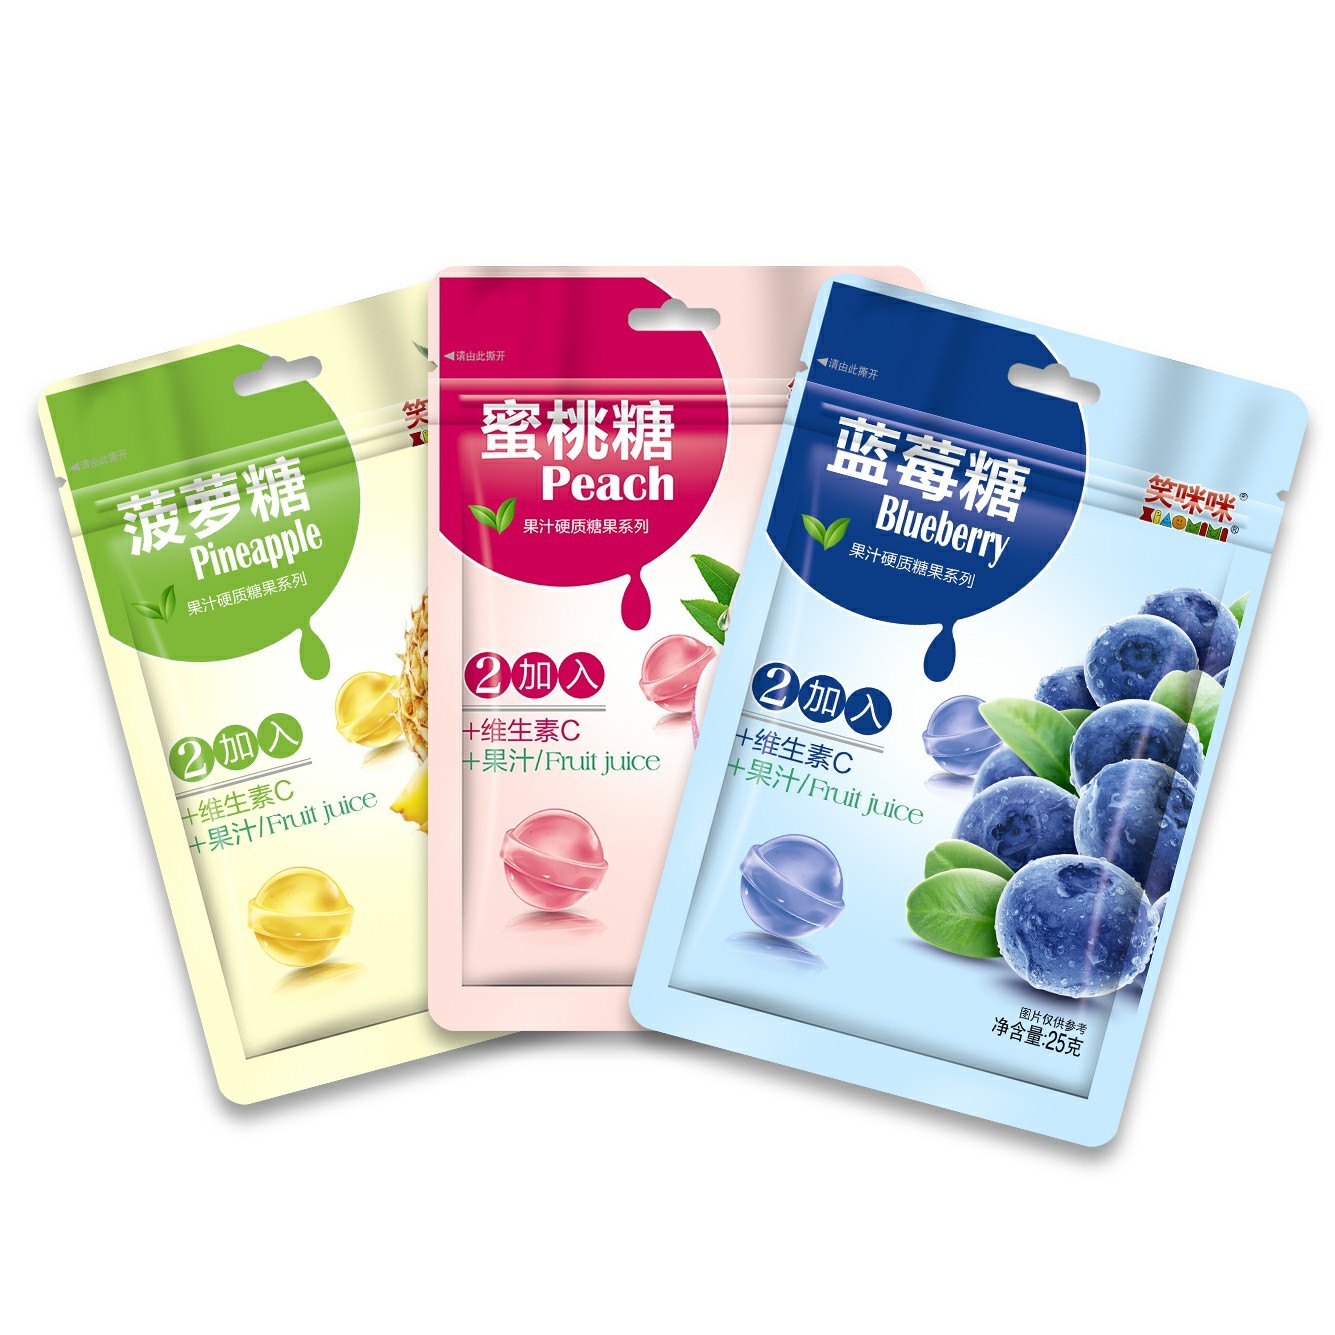 Xiao Mi Mi Pineapple/Peach/Blueberry Sugar 25g